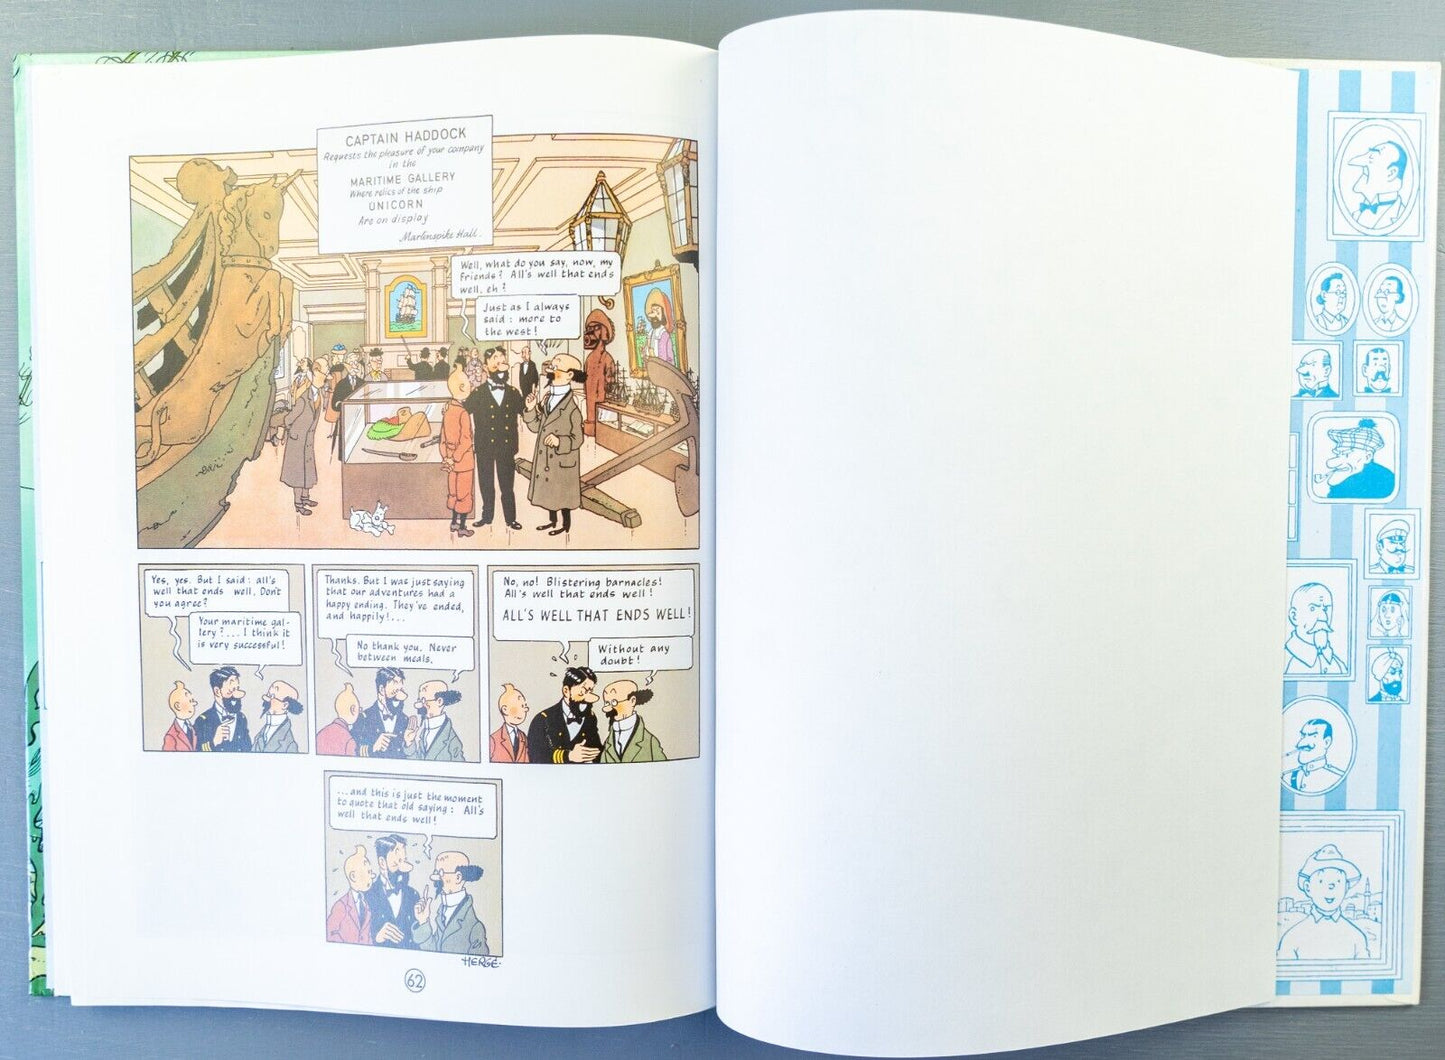 Tintin Red Rackham’s Treasure: Egmont 2000s Hardback Book UK Edition